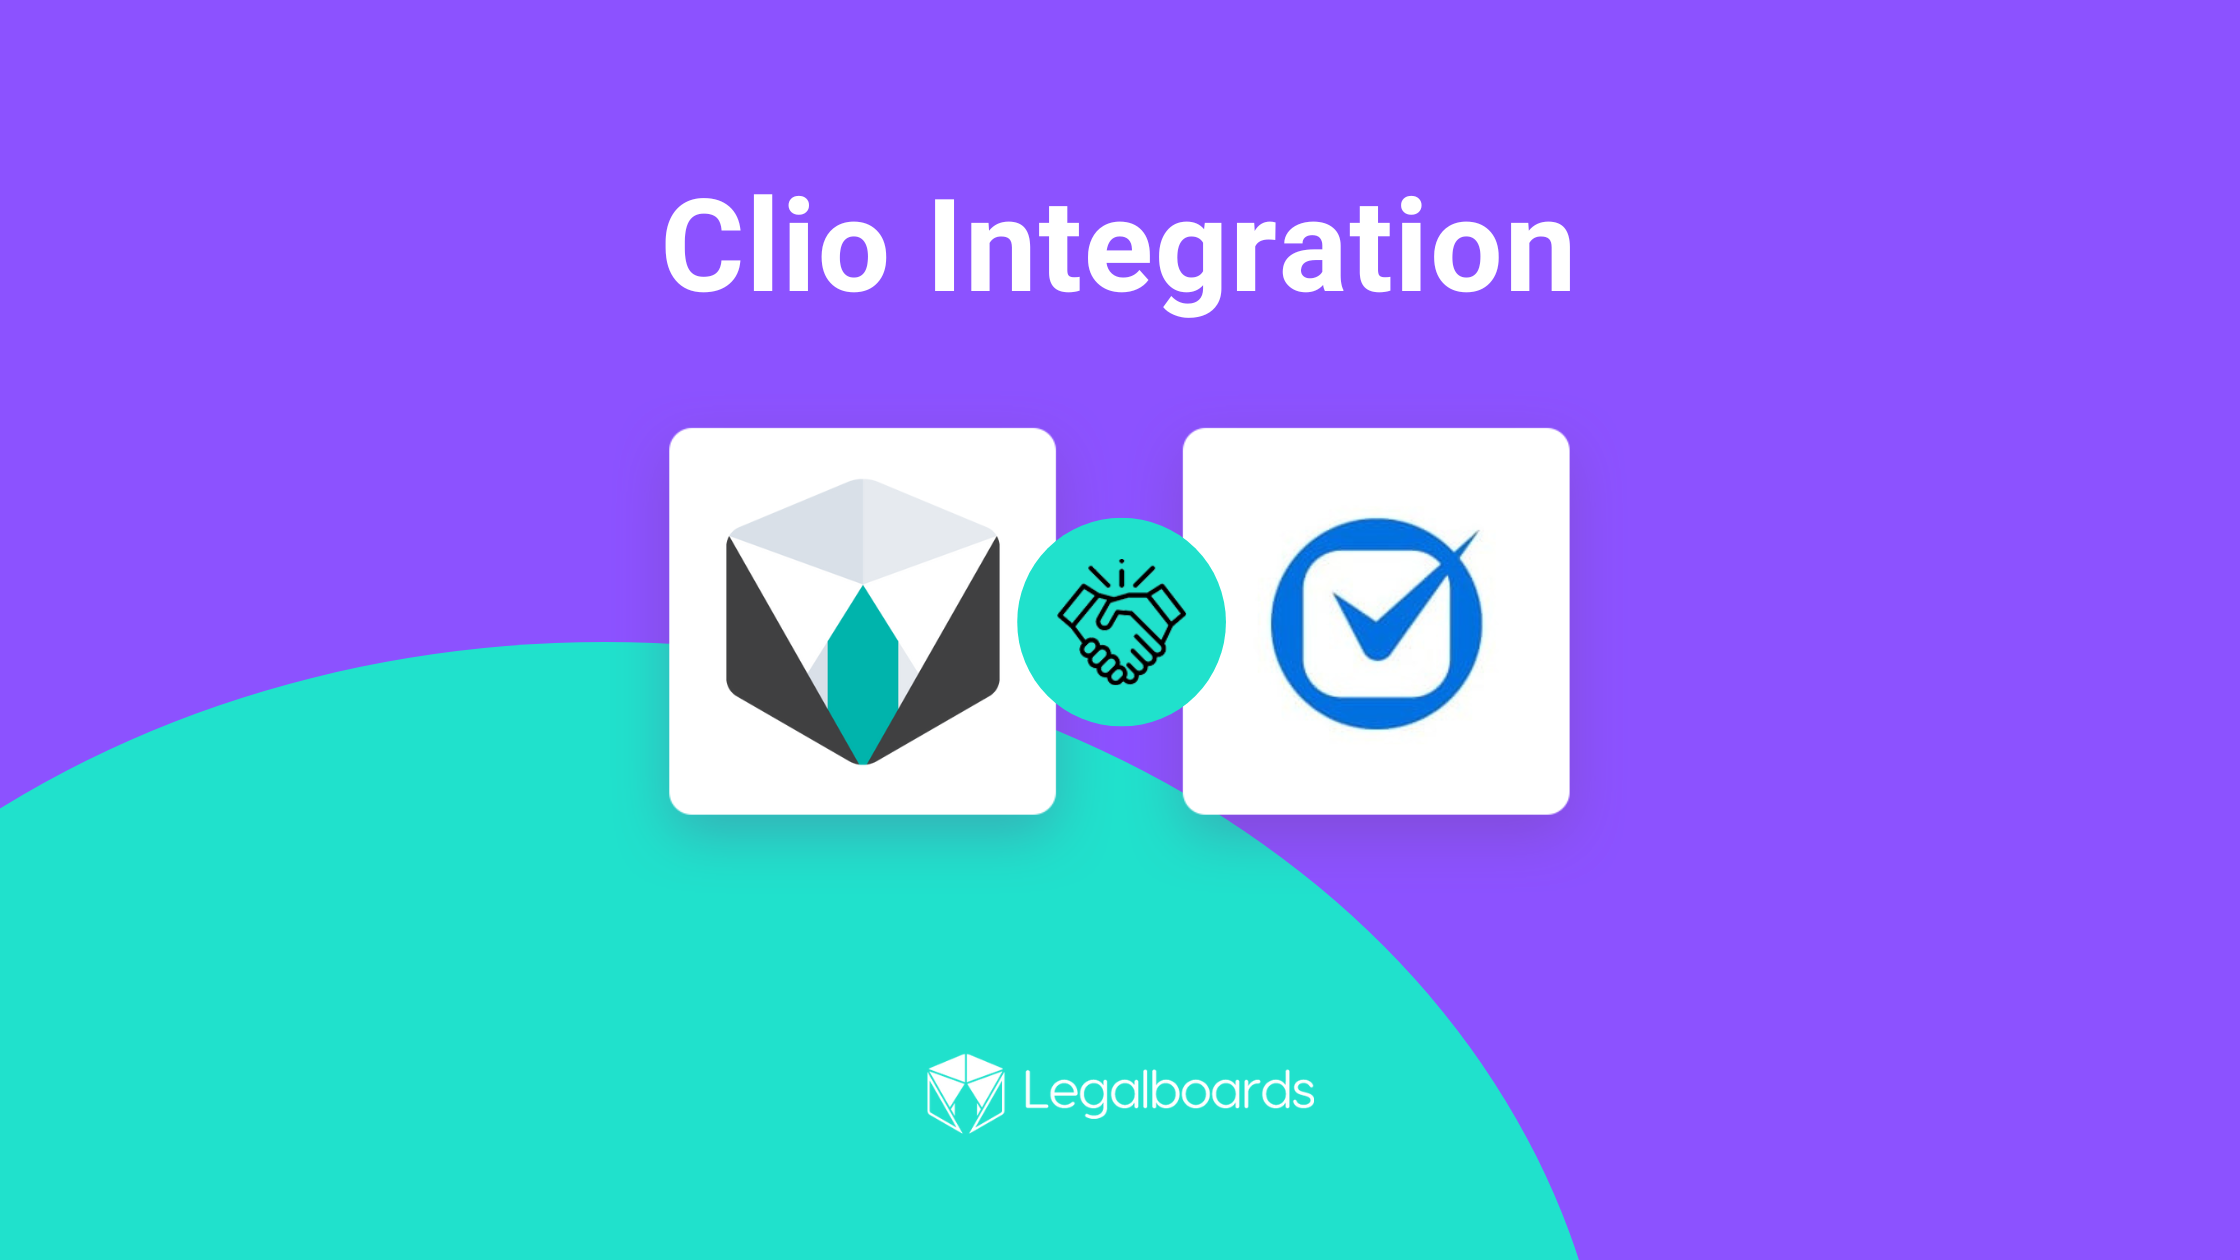 Legalboards and Clio integration